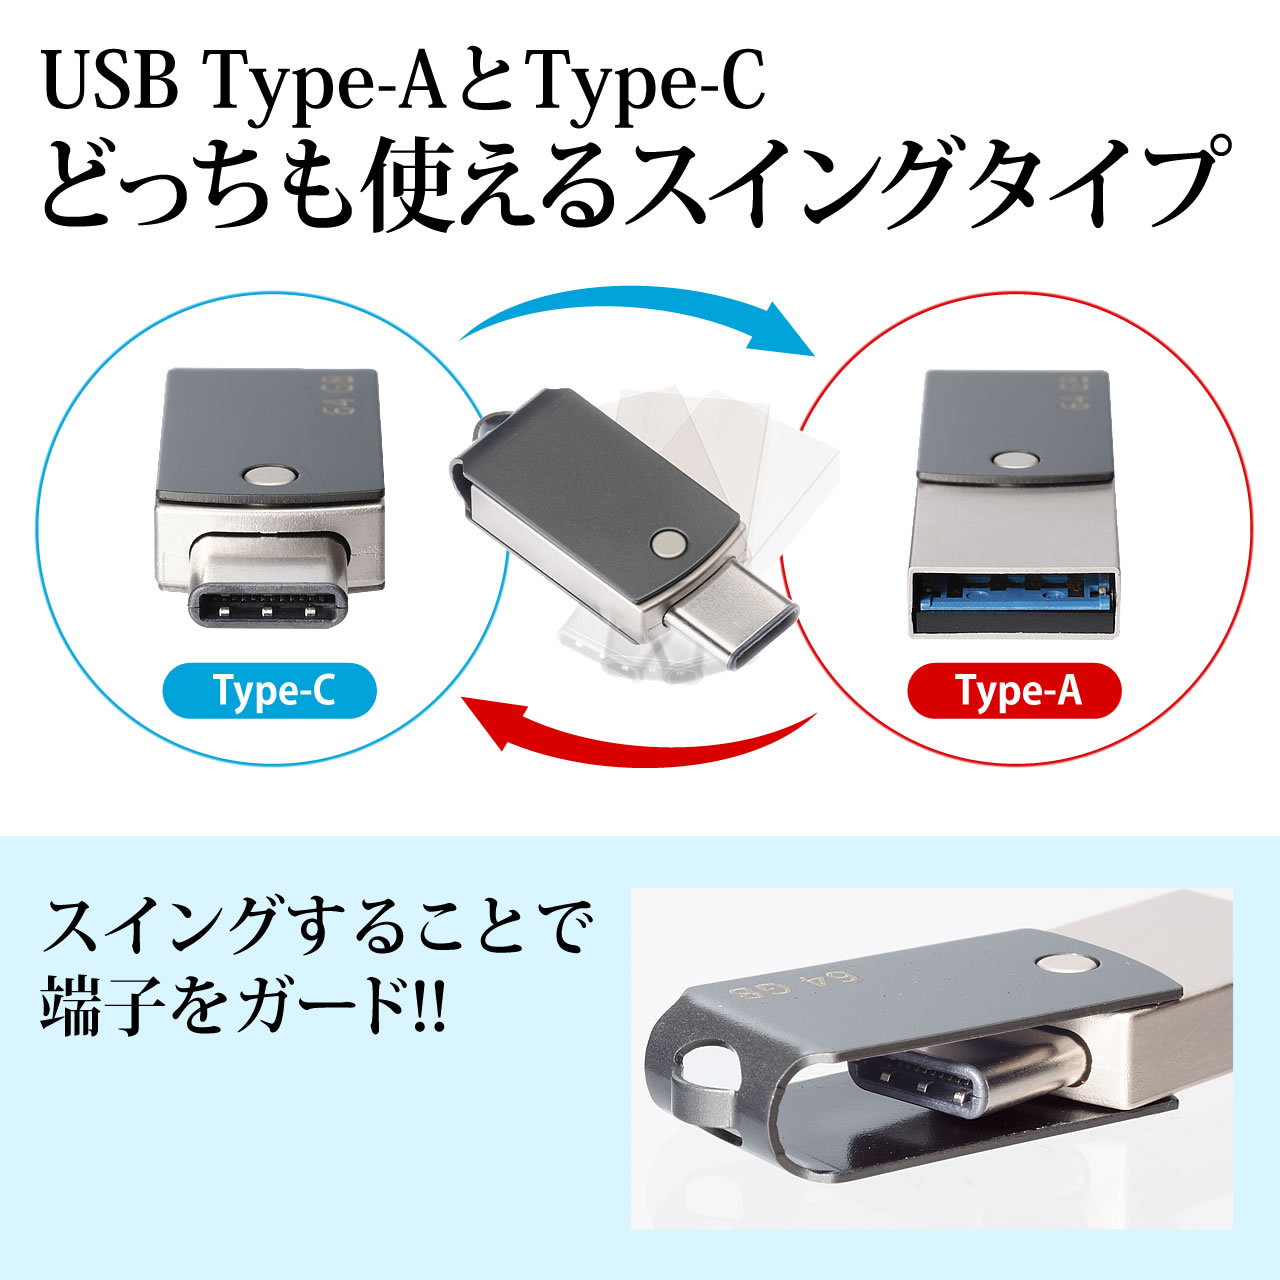 USBiUSB3.1/Type CEUSB3.0E64GBEELbvXj 600-3TC64G